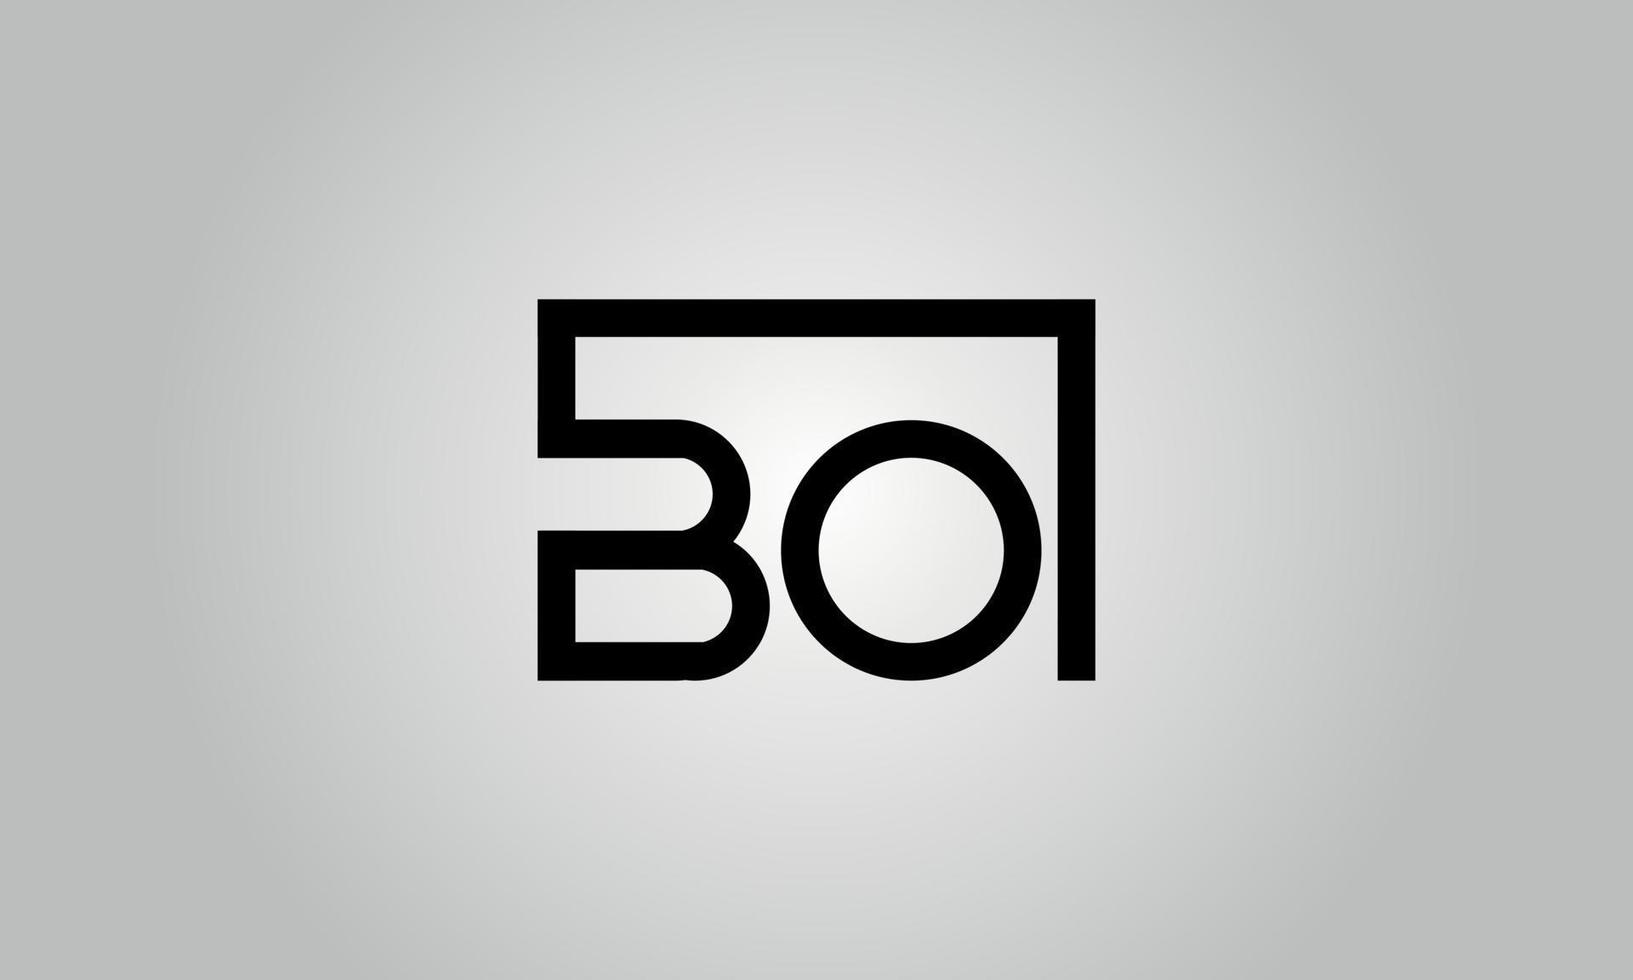 Letter BO logo design. BO logo with square shape in black colors vector free vector template.